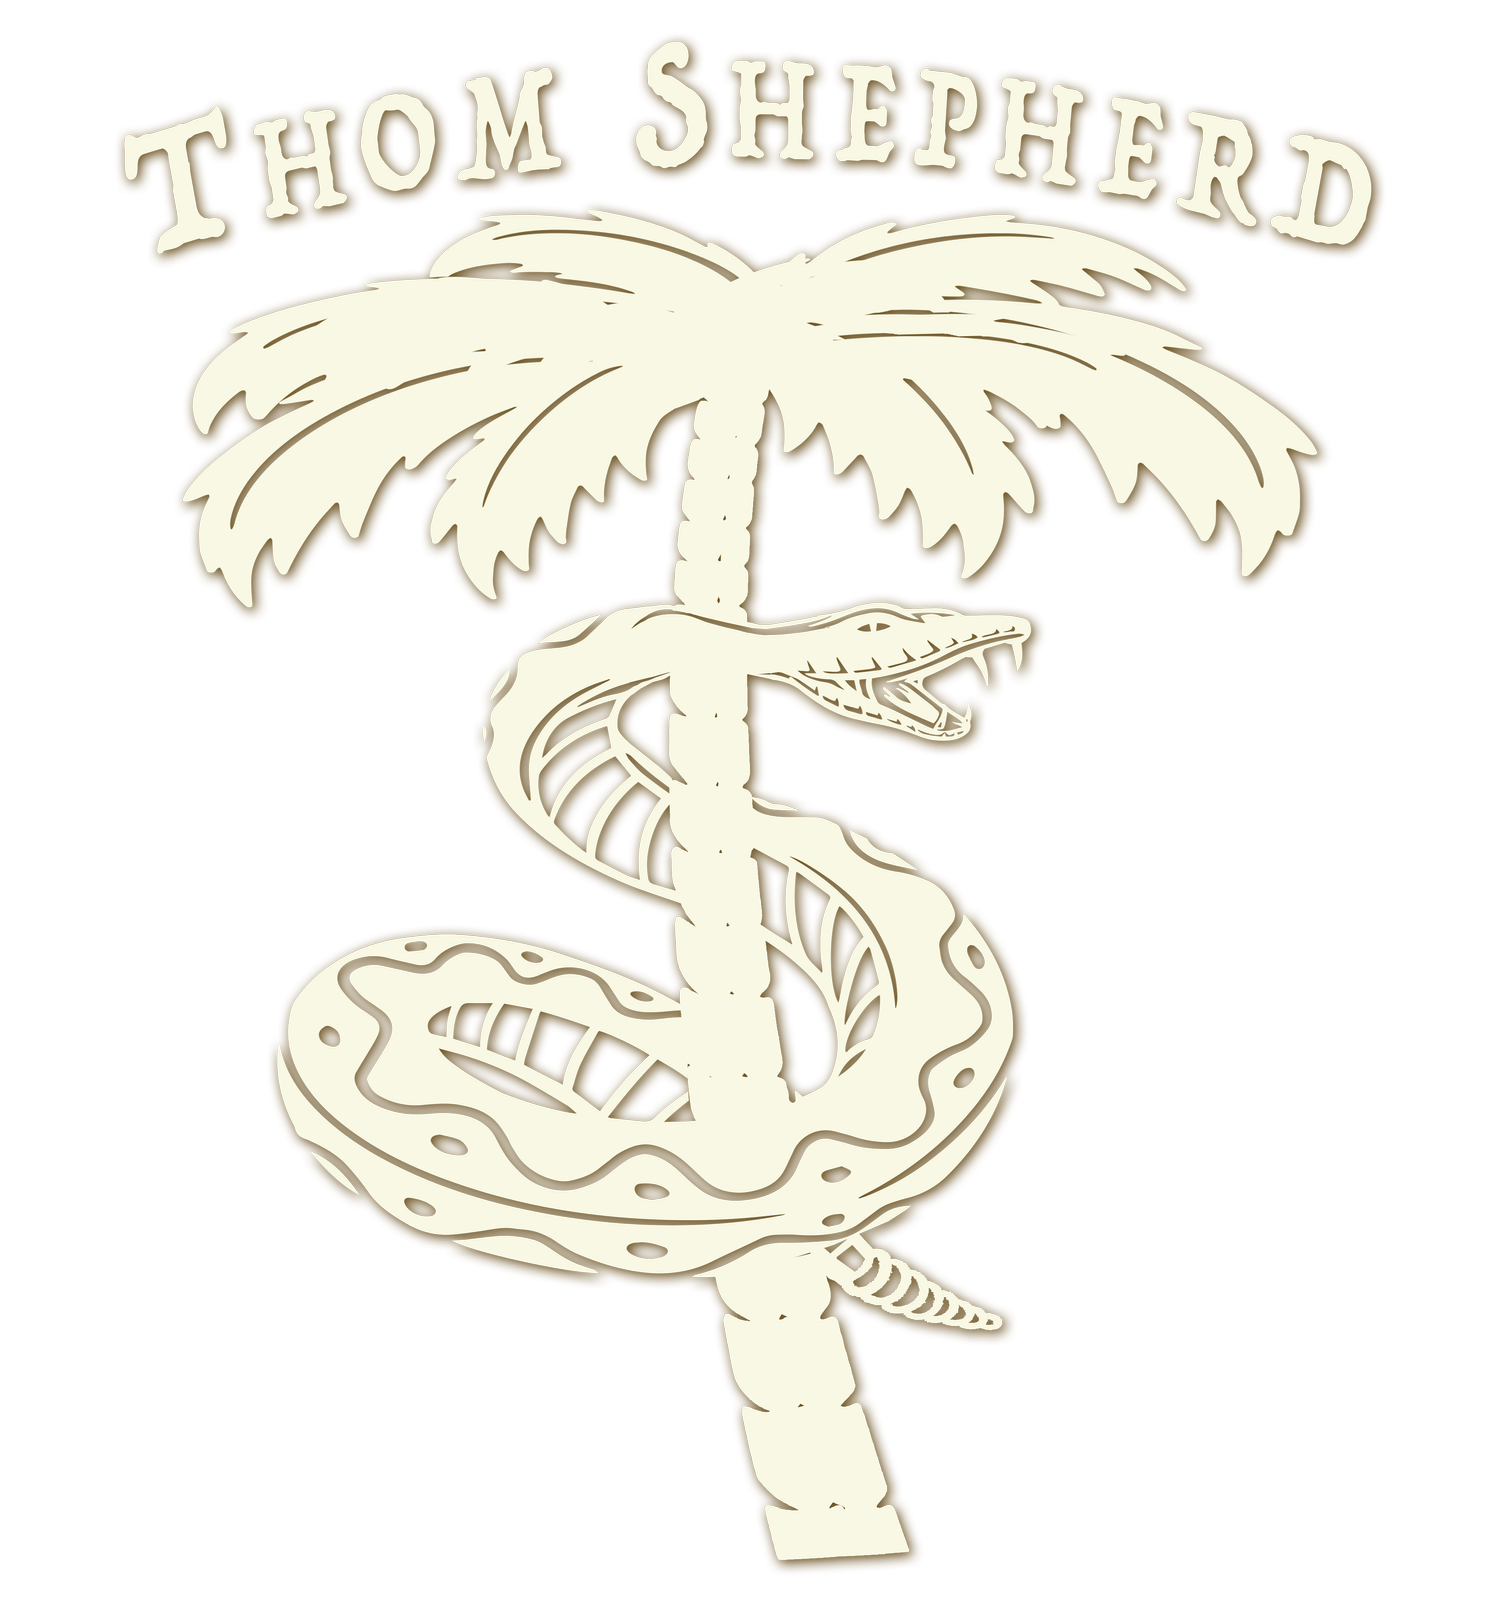 Thom Shepherd